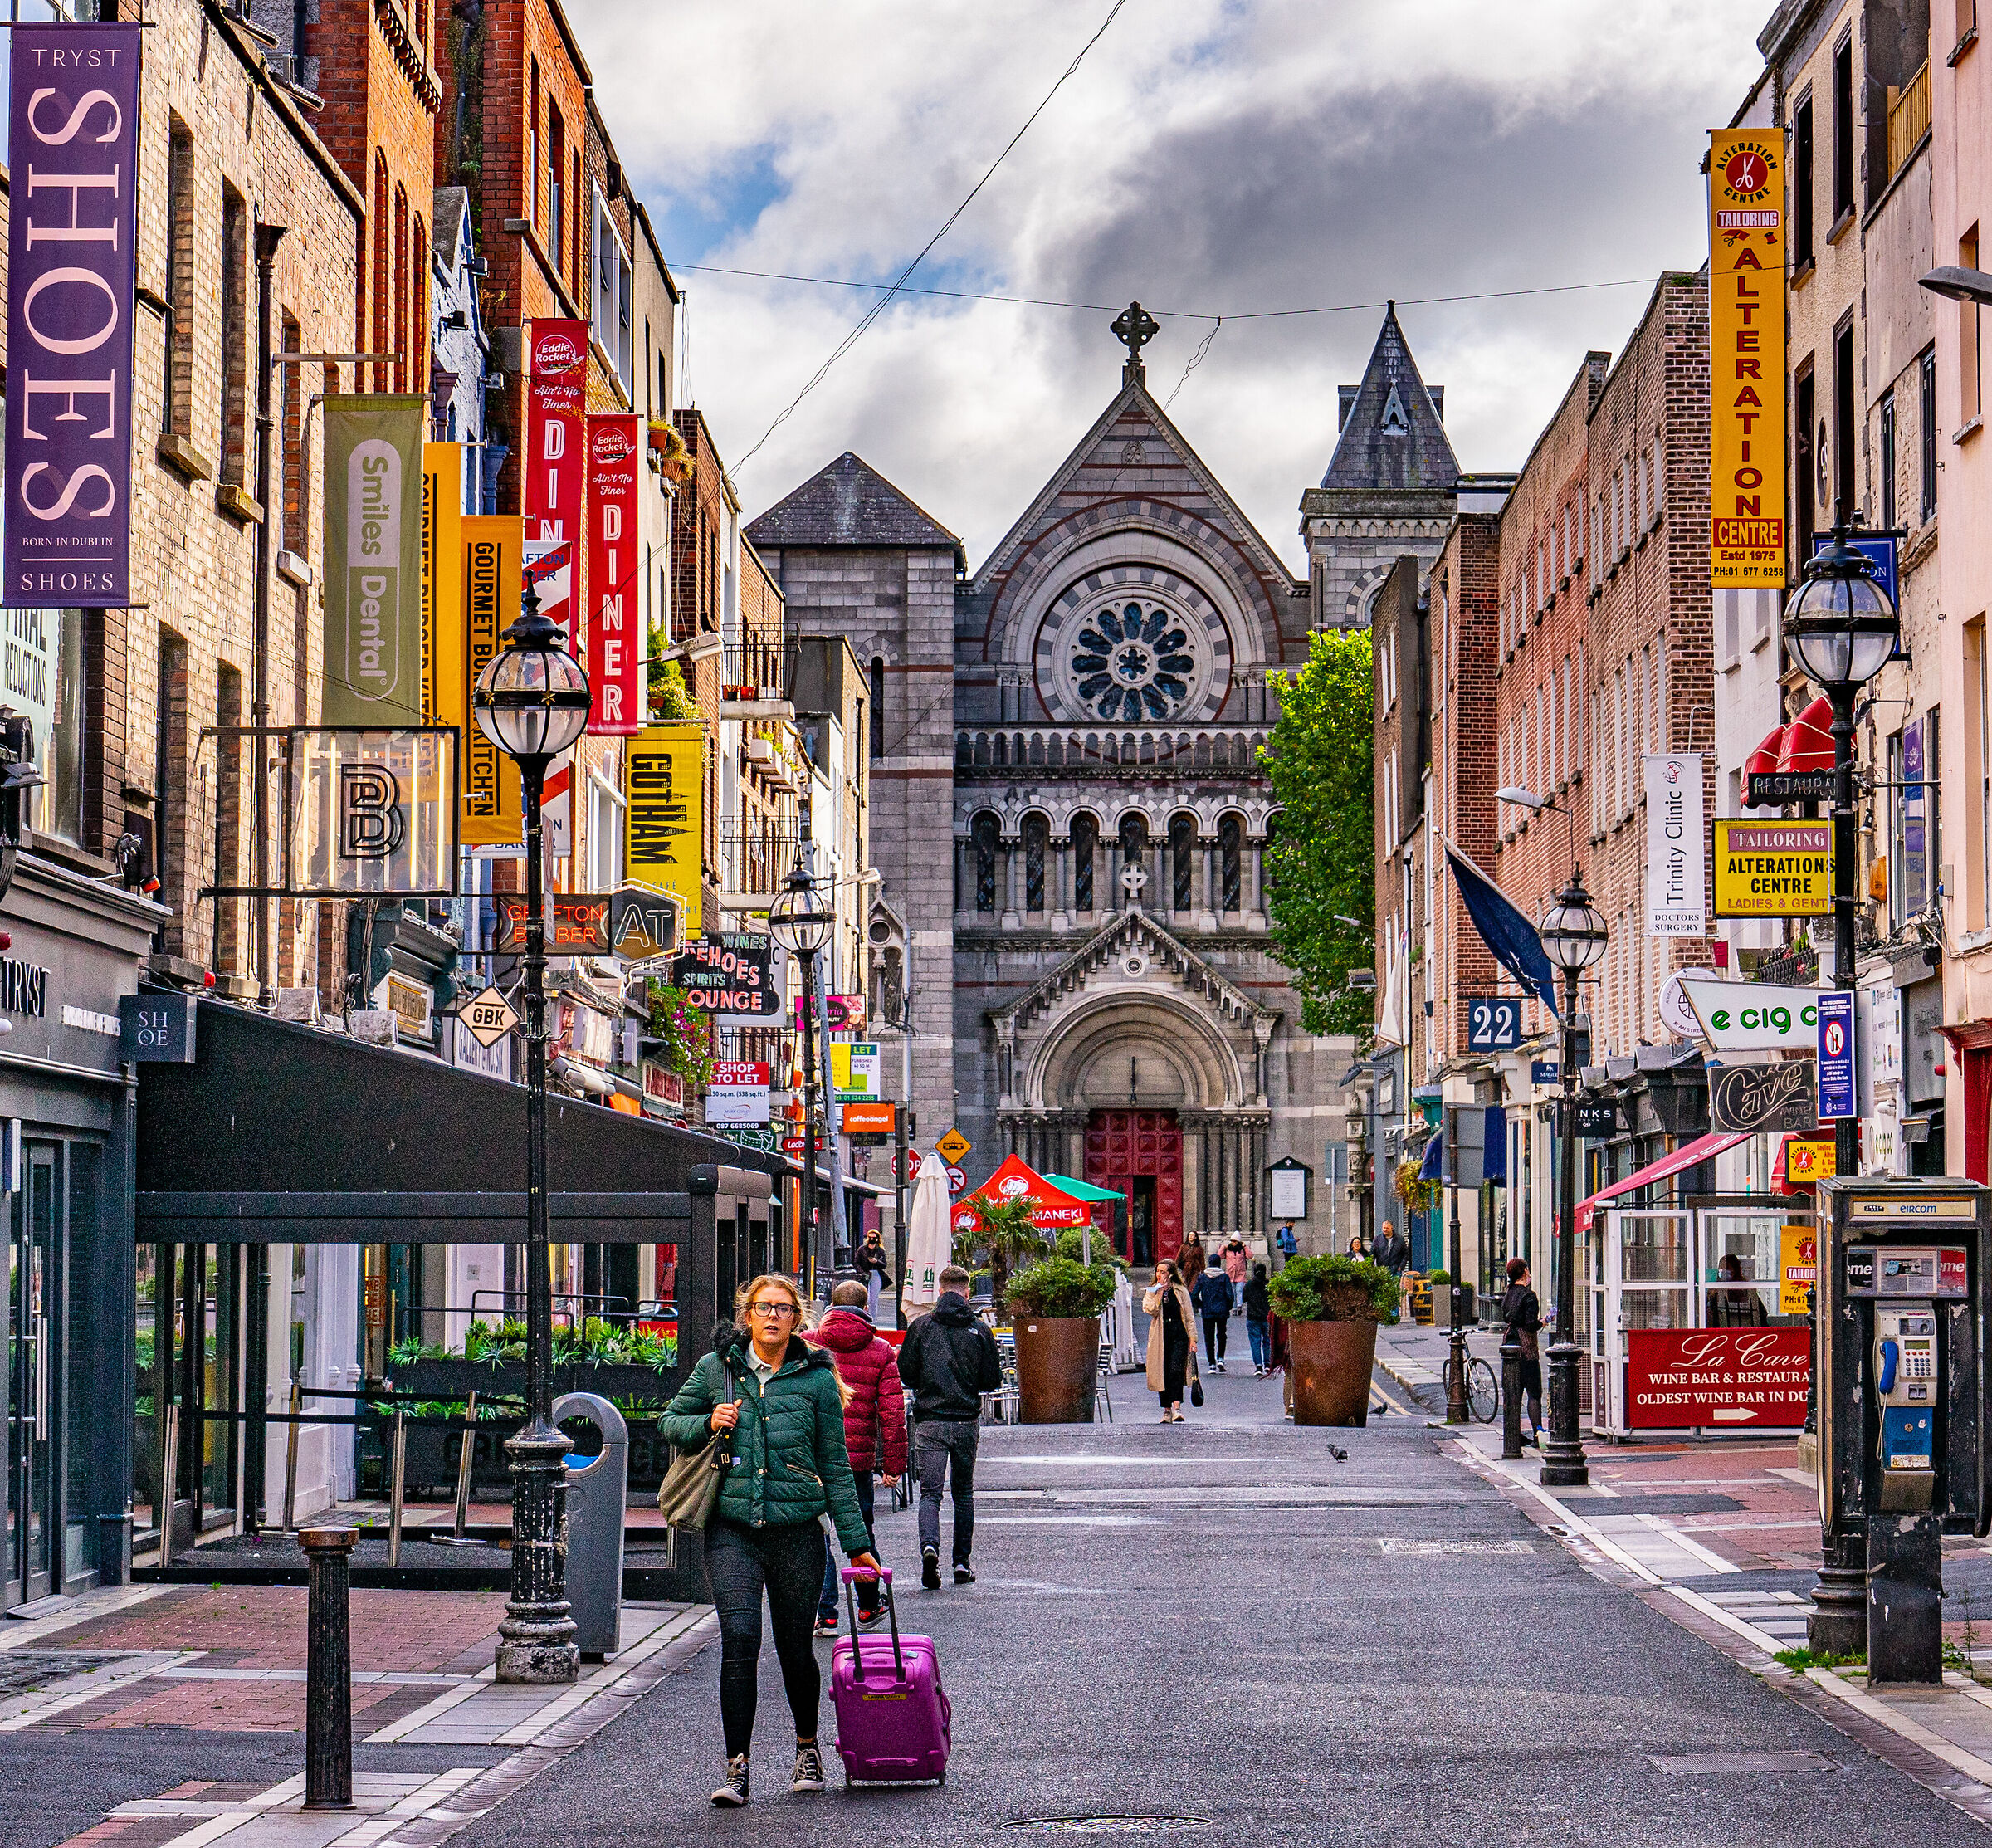 Anne St South (Dublin City, Ireland)...